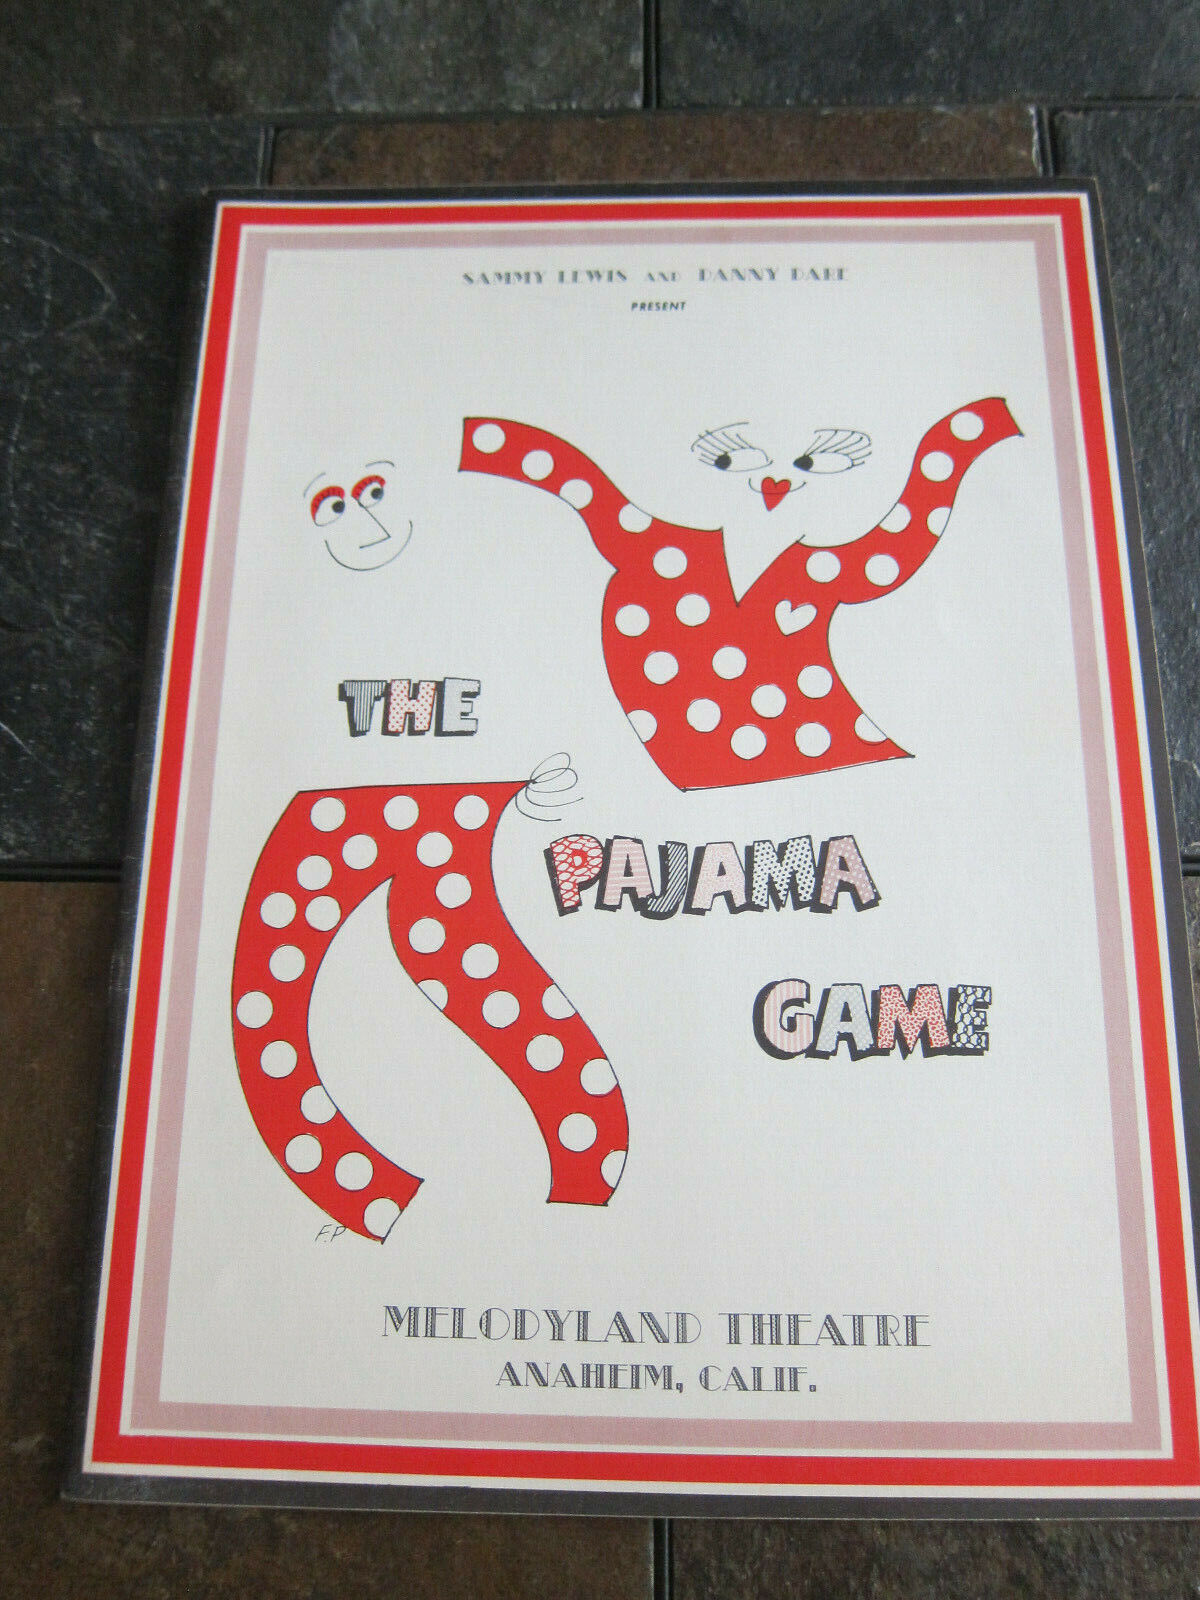 1964 Reservation Program Melodyland Theatre Anaheim Pajama Game Arlington Mall R California